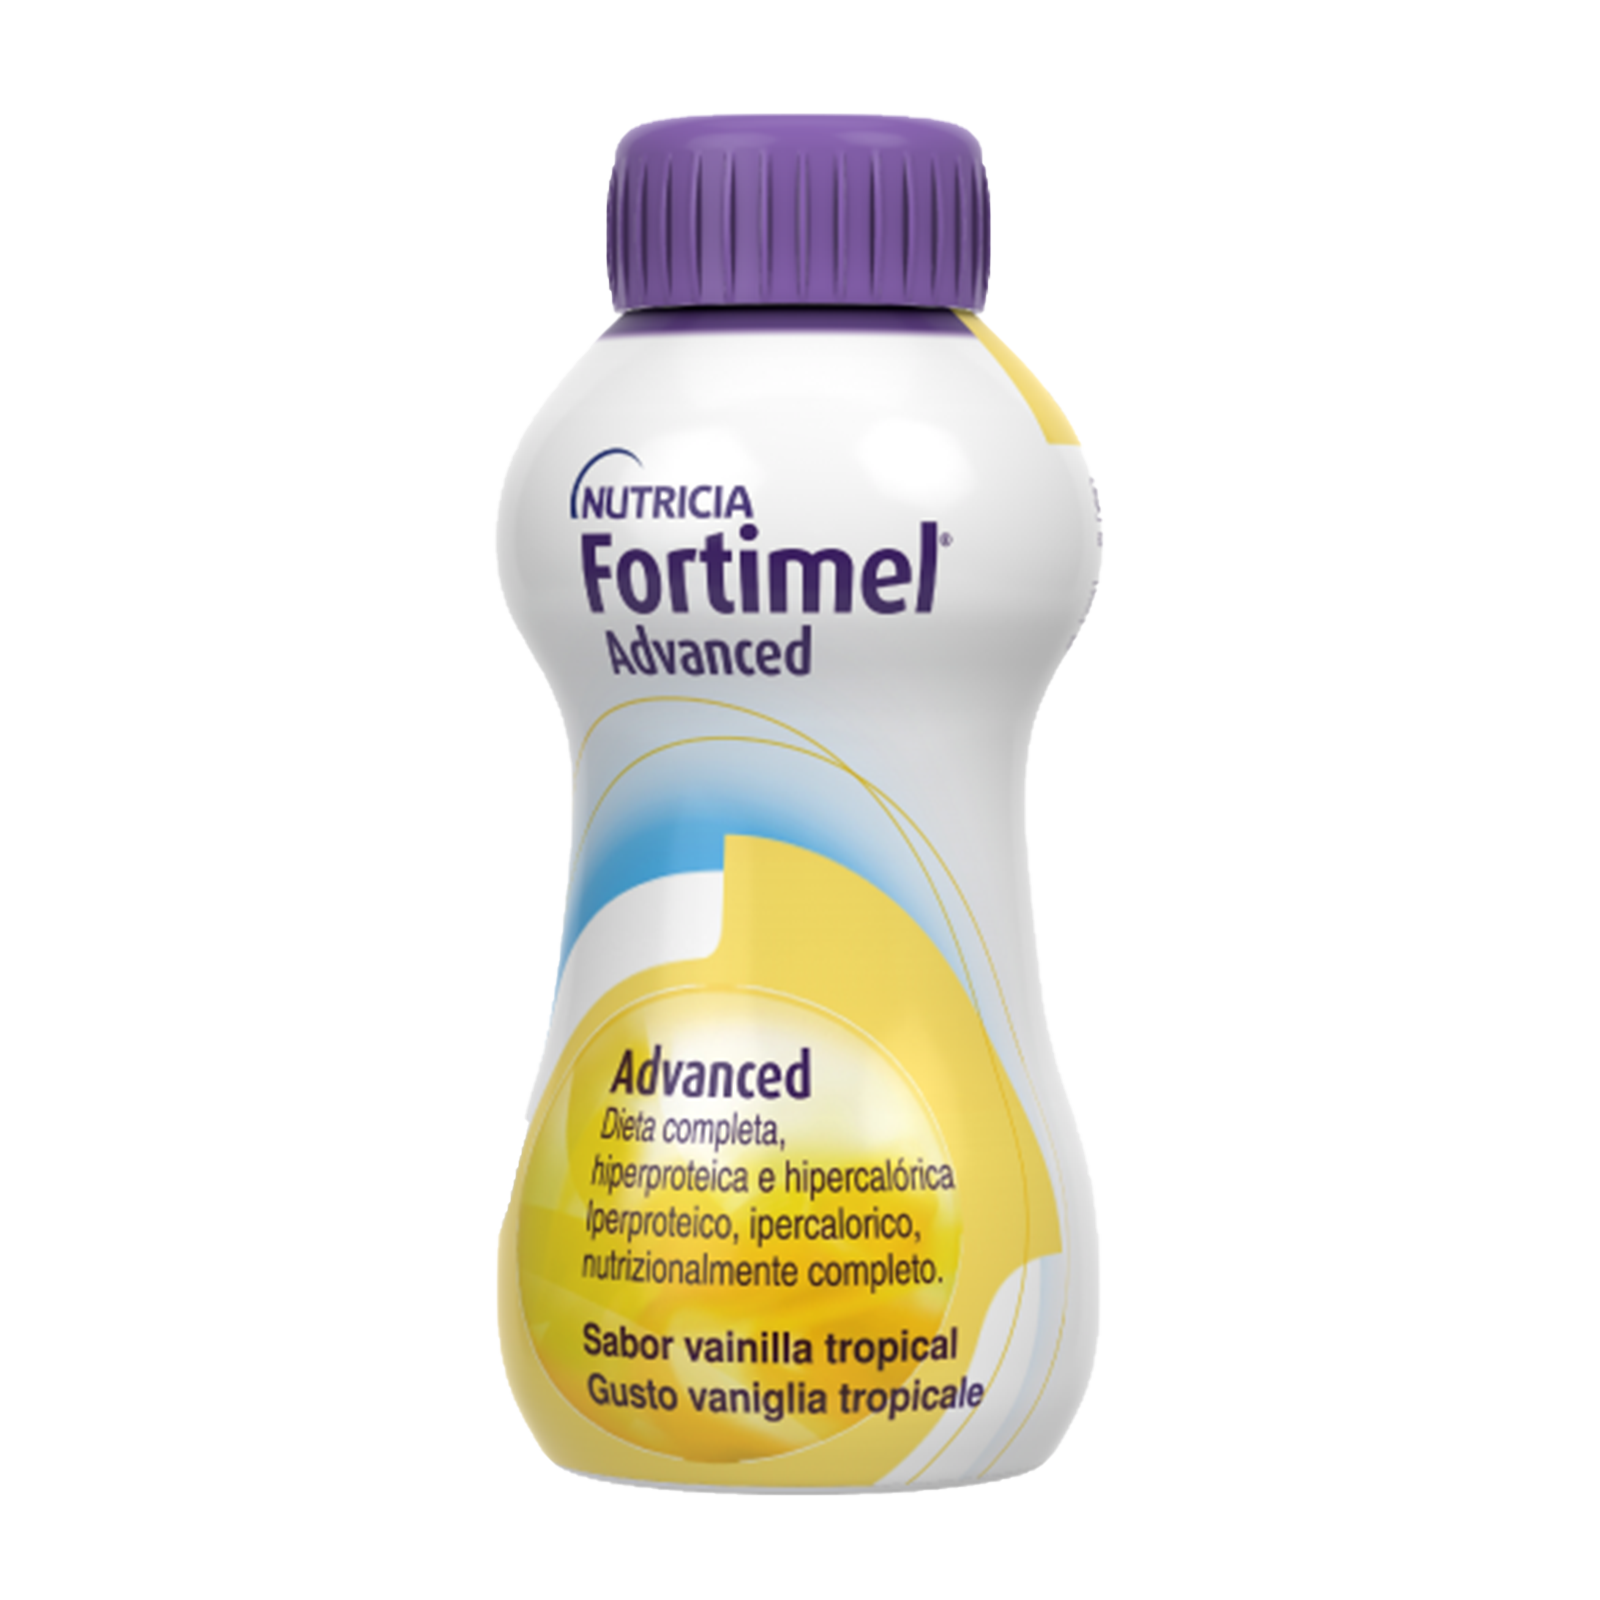 Fortimel Advanced Vaniglia tropicale 24 bottigliette | Fortimel Nutricia